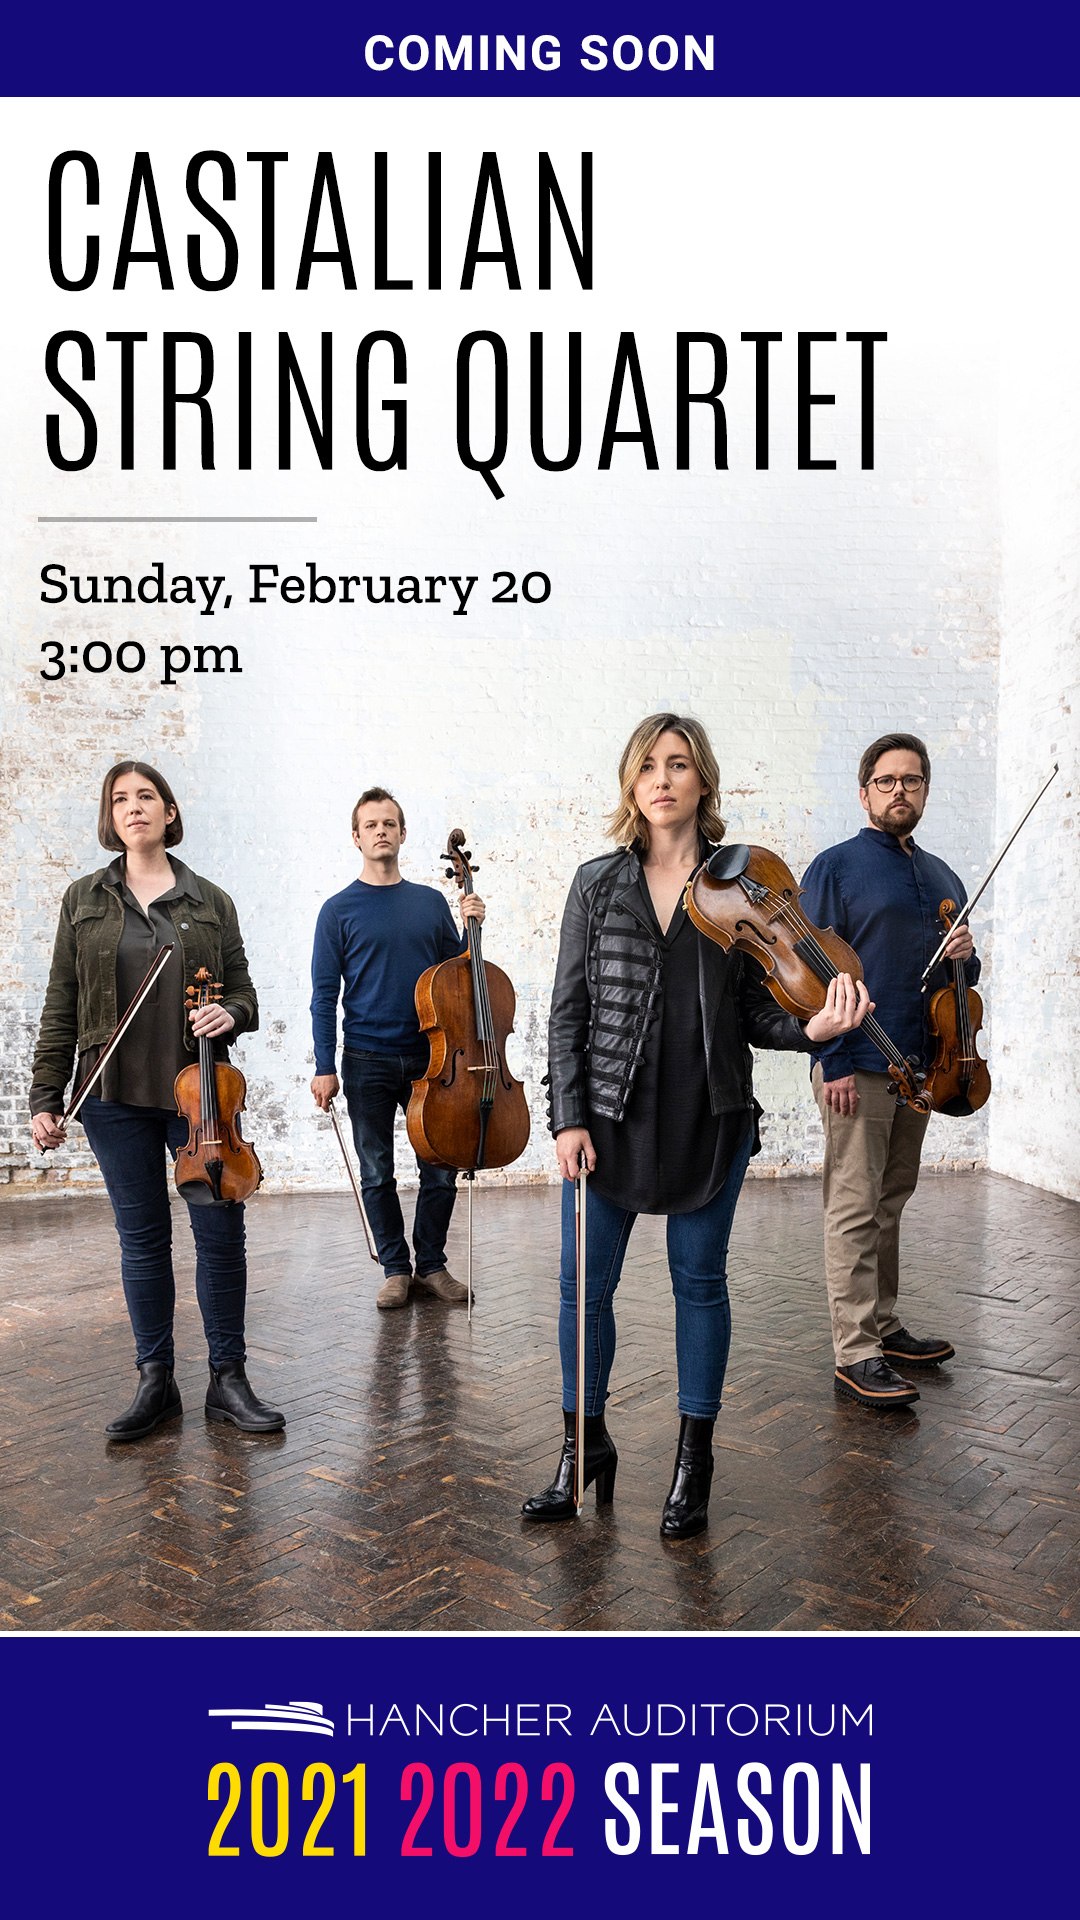 Castalian String Quartet - Coming soon